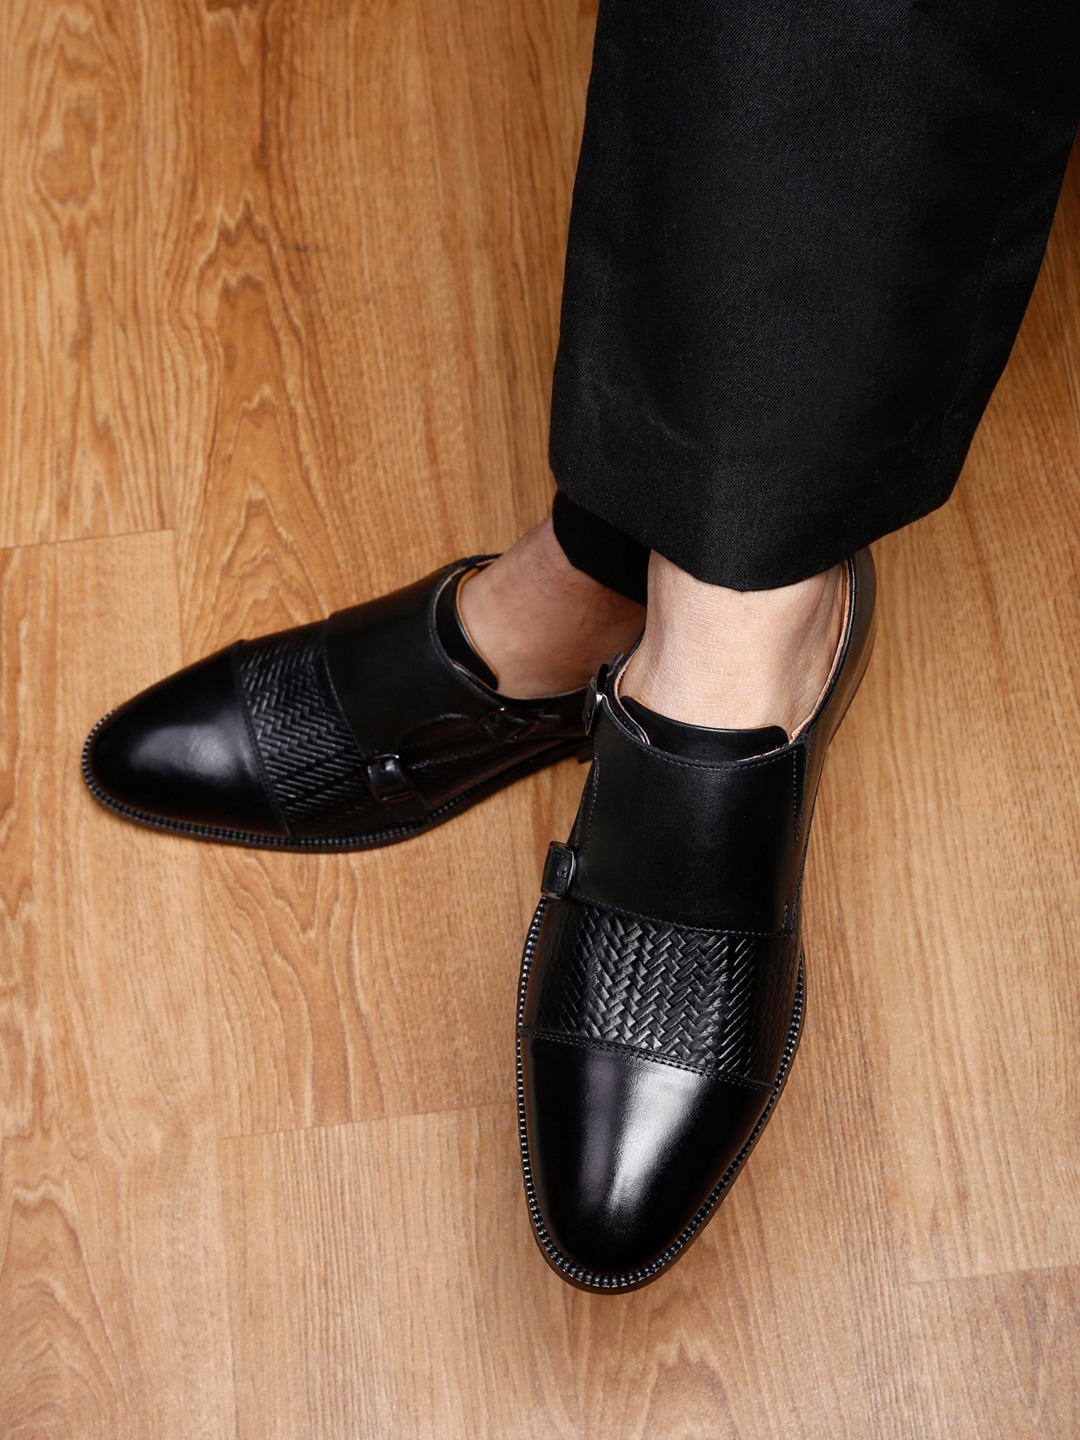 Louis Vuitton Mens Oxford Shoes Black Leather Round Toe Lace Up